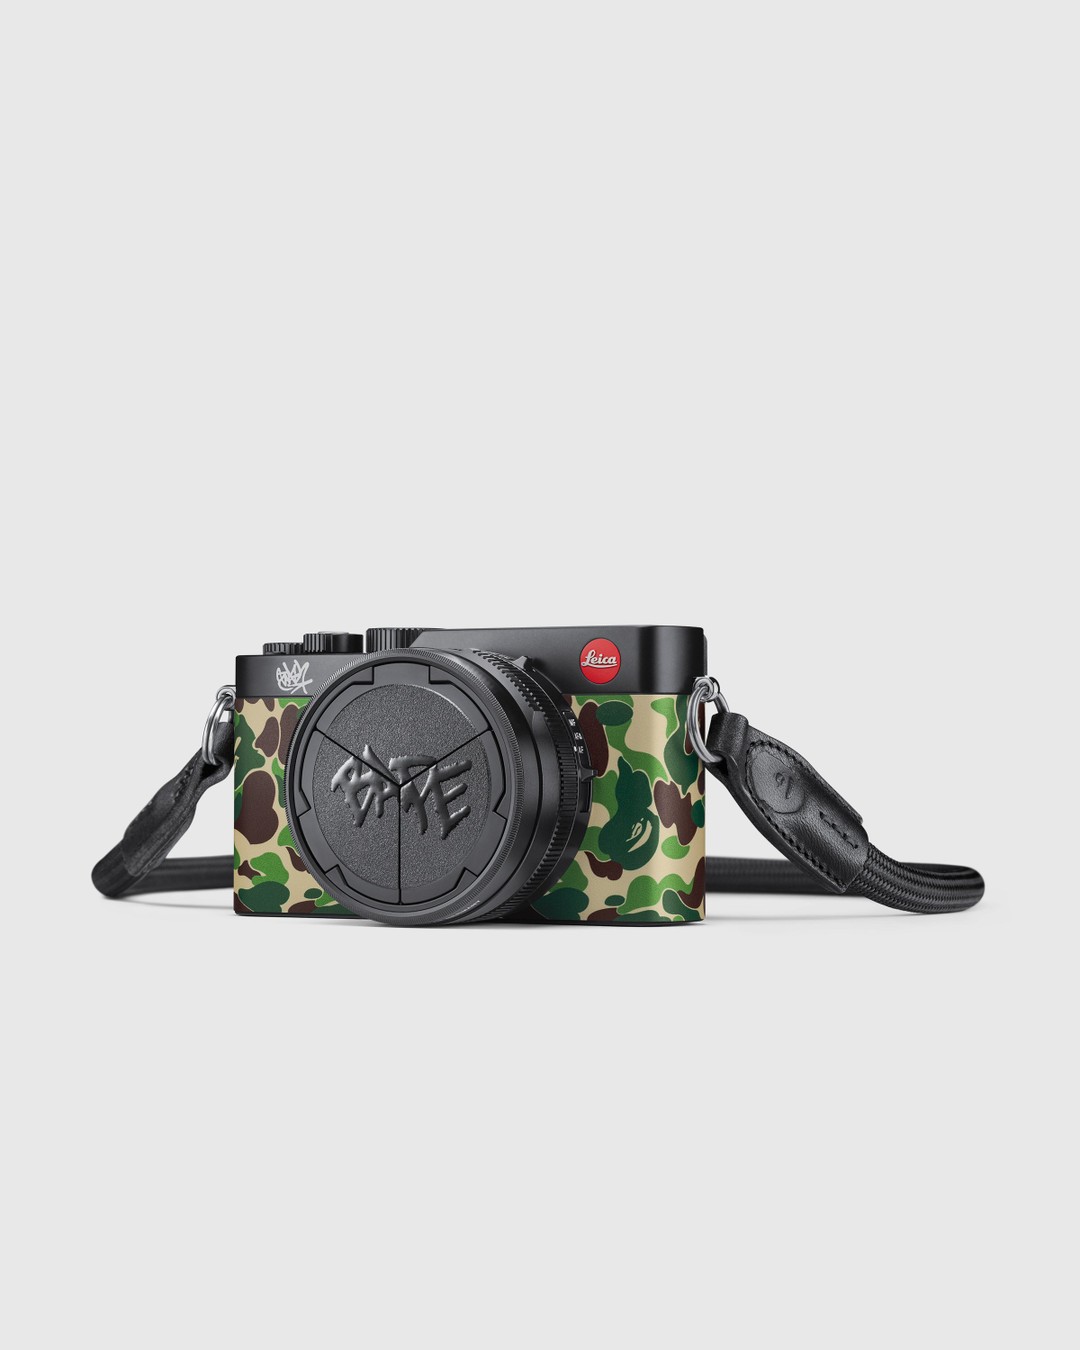 Leica – D-Lux 7 “A BATHING APE® x STASH” Edition Black - Cameras & Accessories - Multi - Image 3